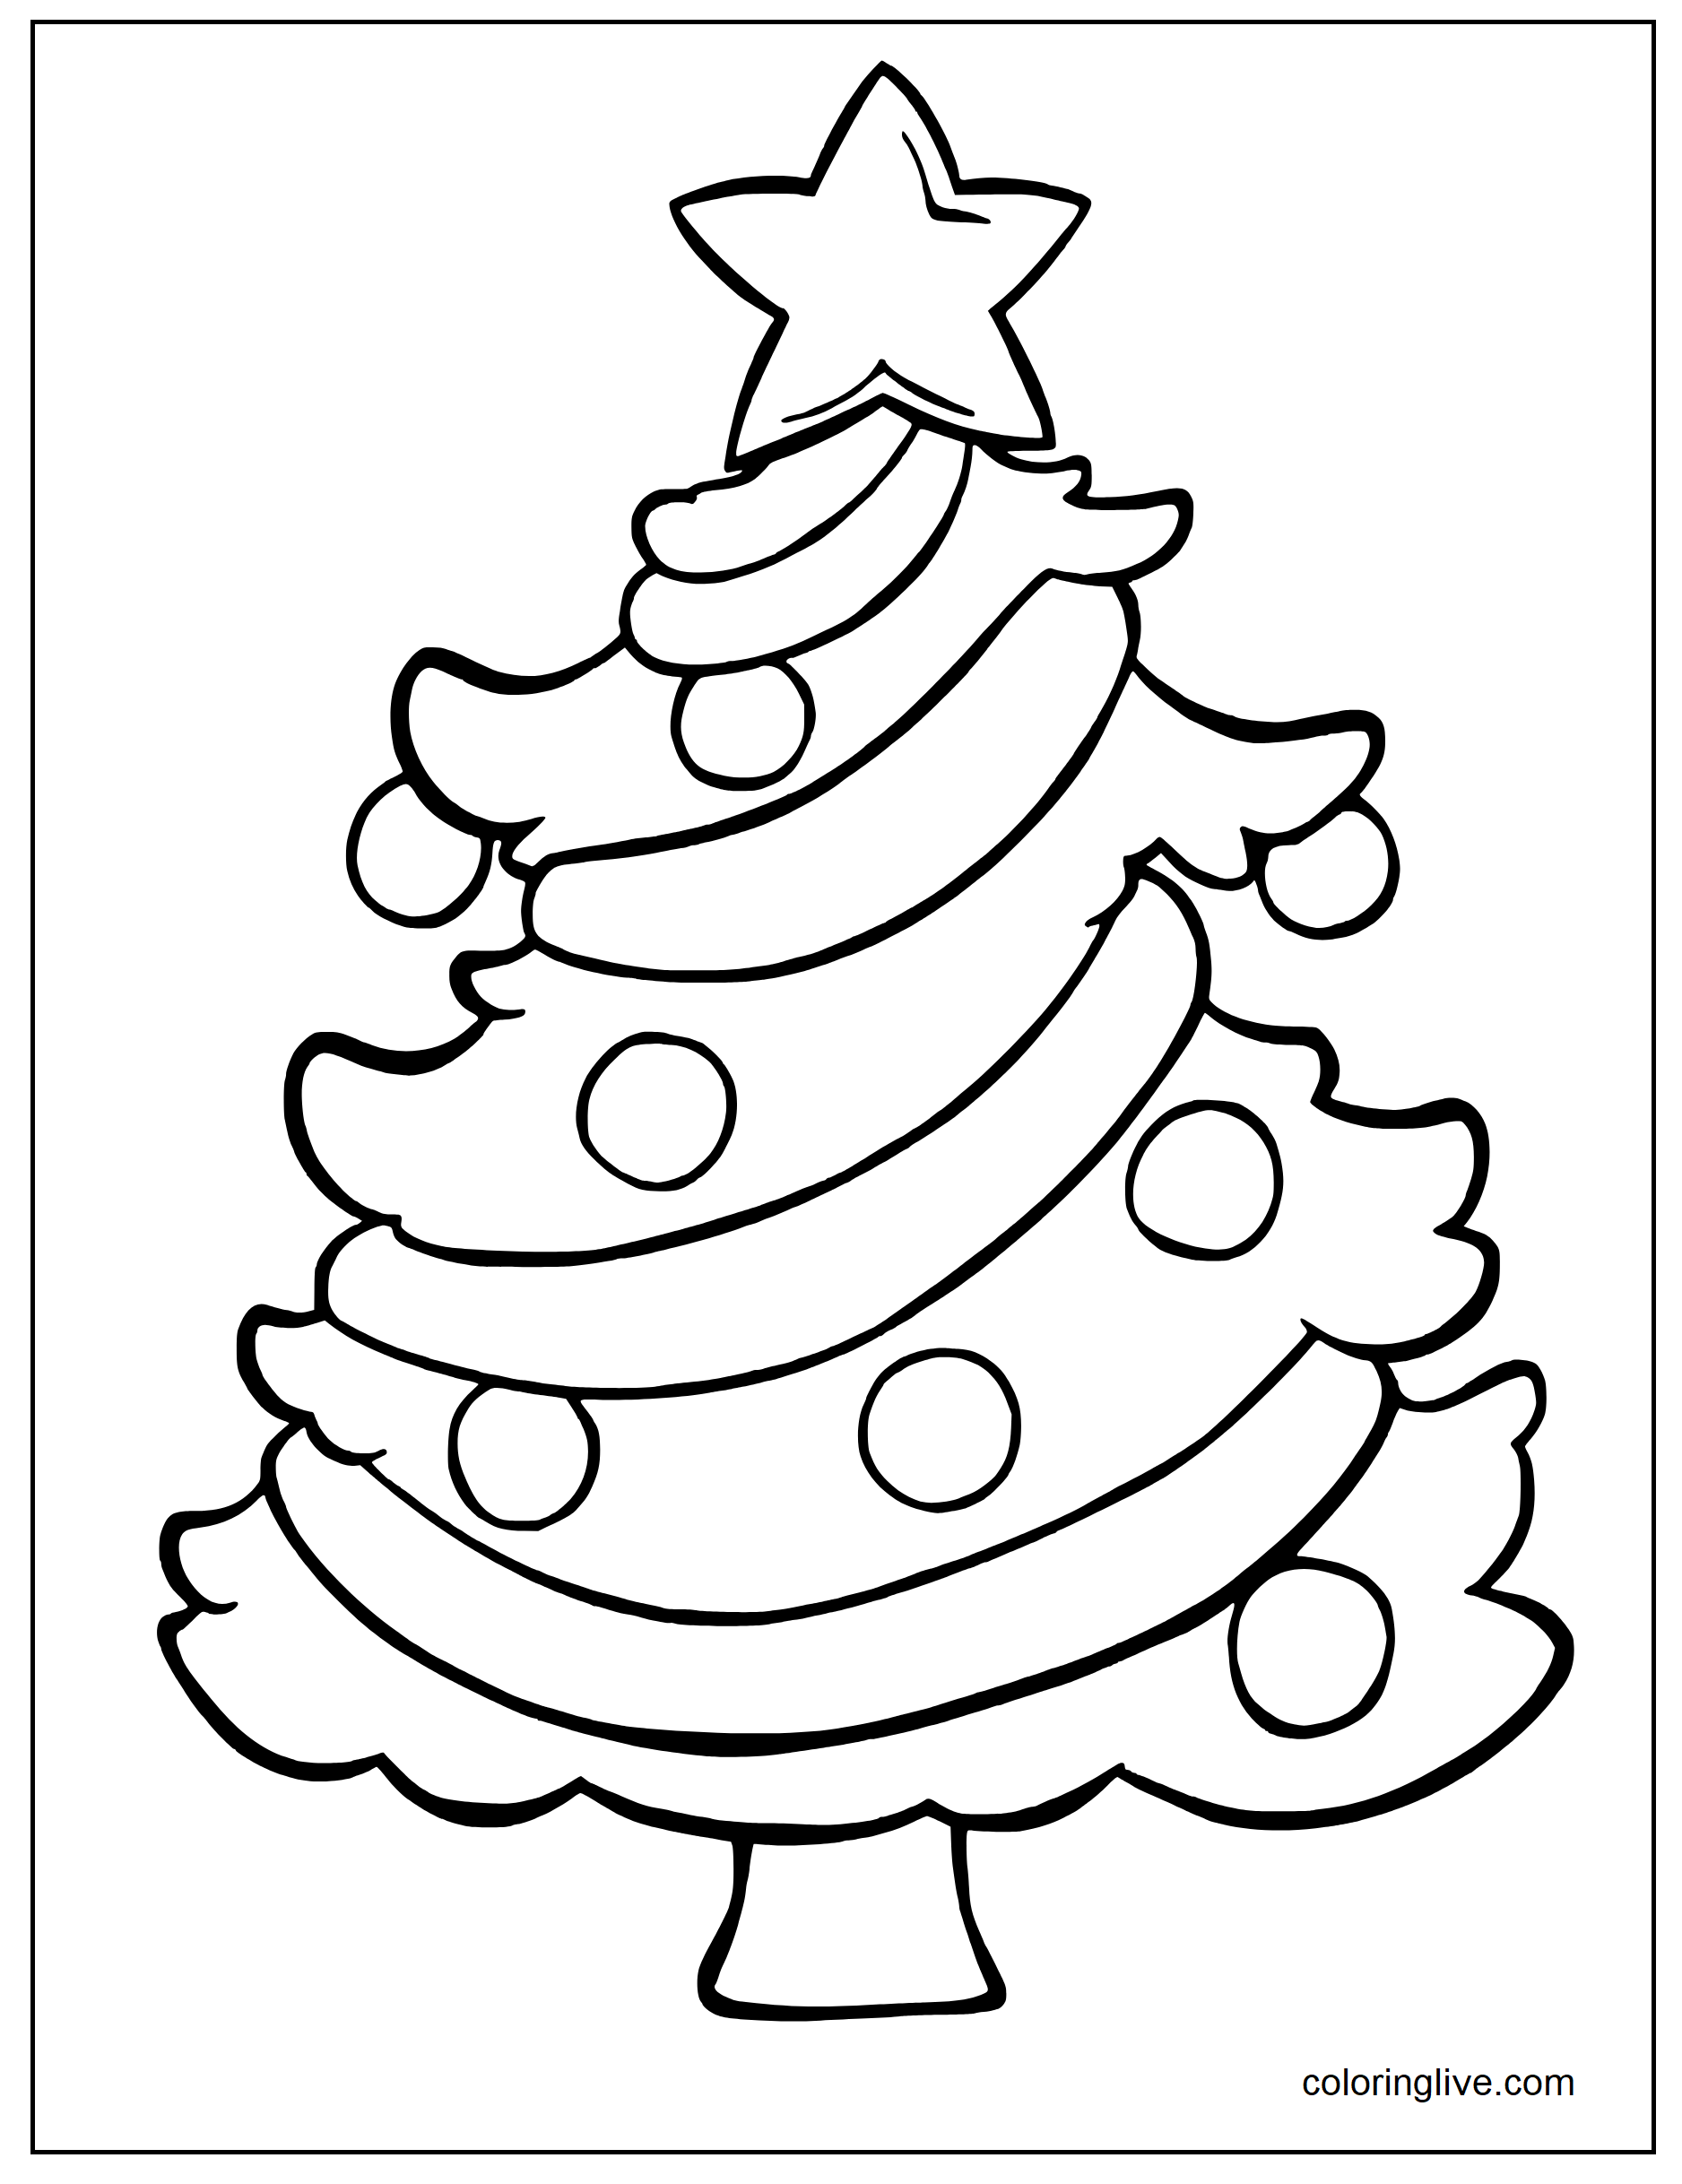 Printable Blank christmas tree  sheet Coloring Page for kids.